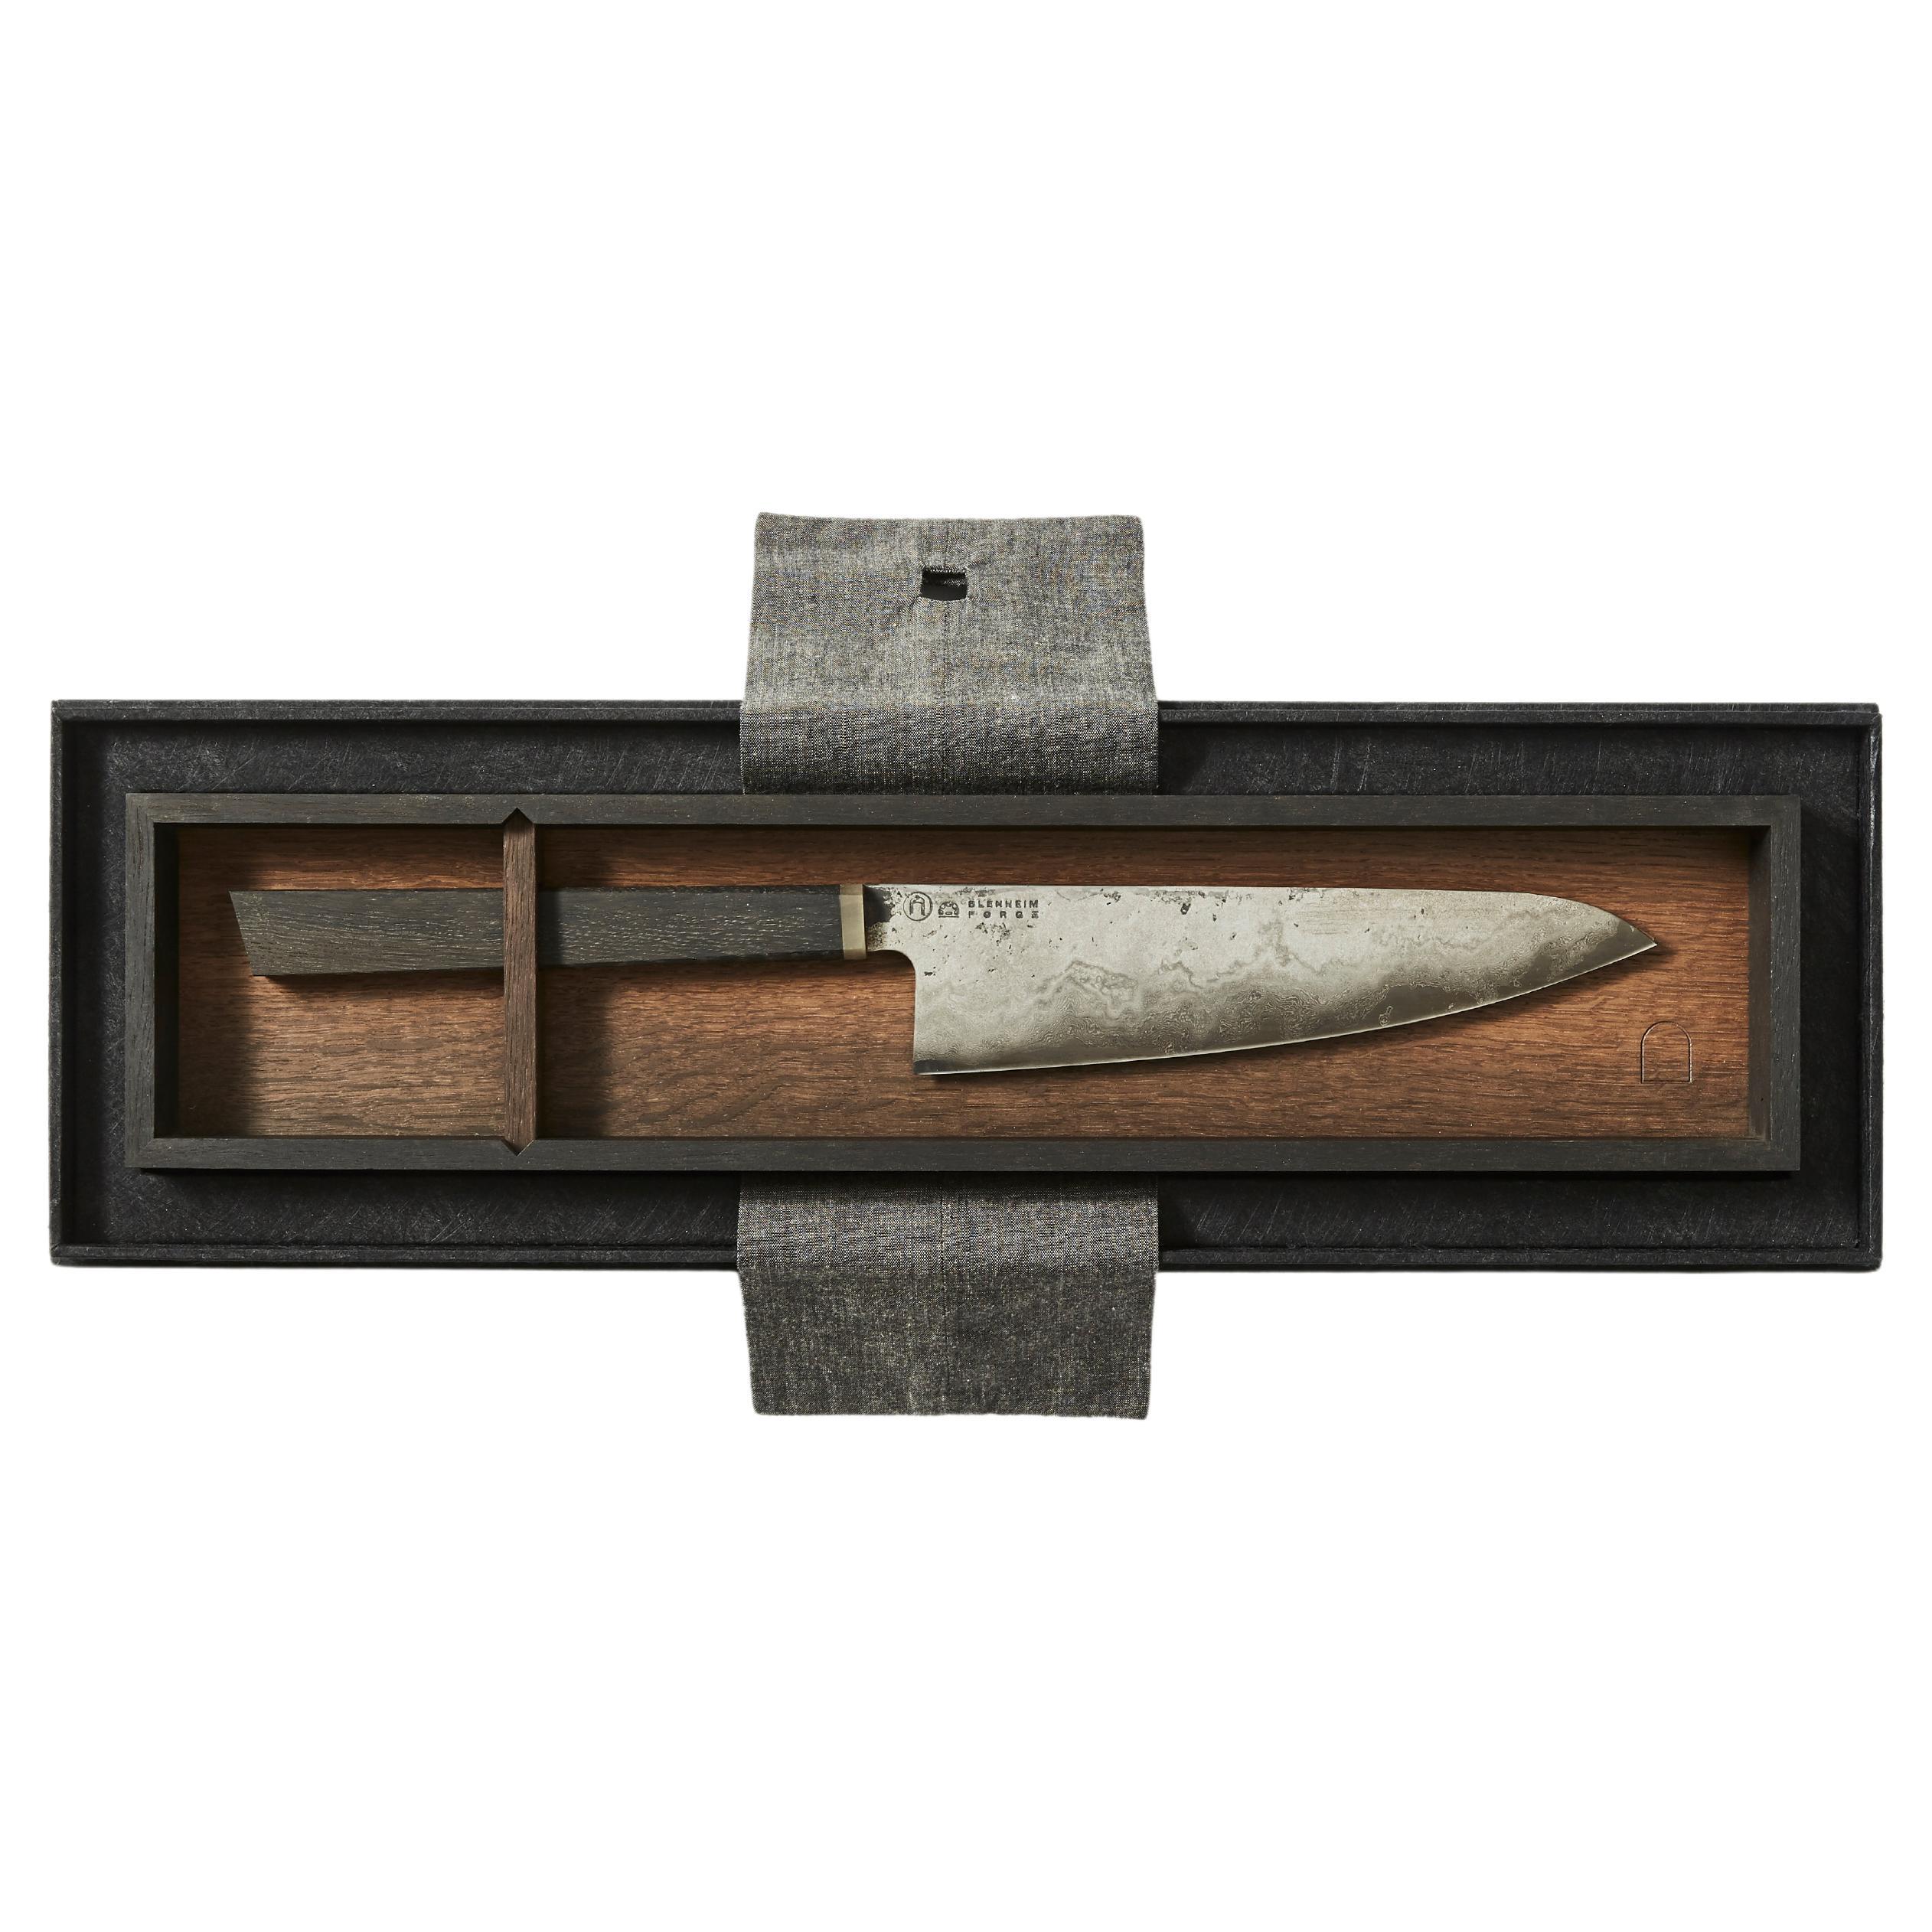 Single Damascus Knife Set with 3000-5000 Year-Old Bog-Oak Display Box